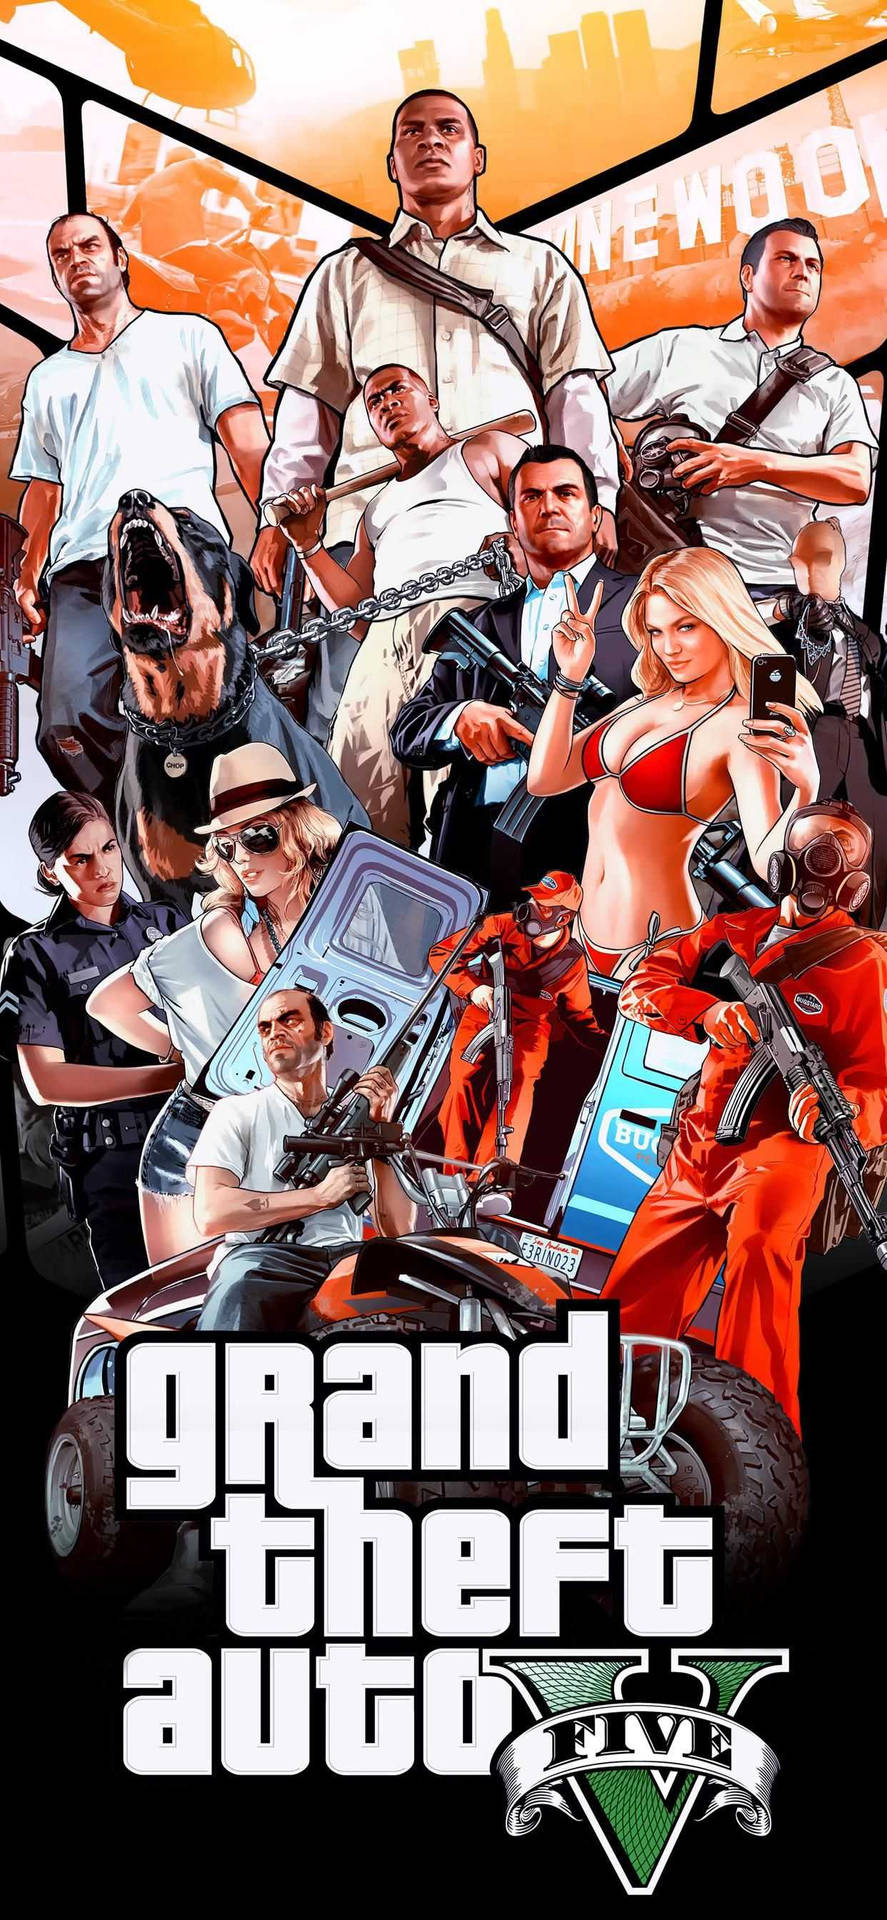 GTA 5 Poster Collage Wallpaper